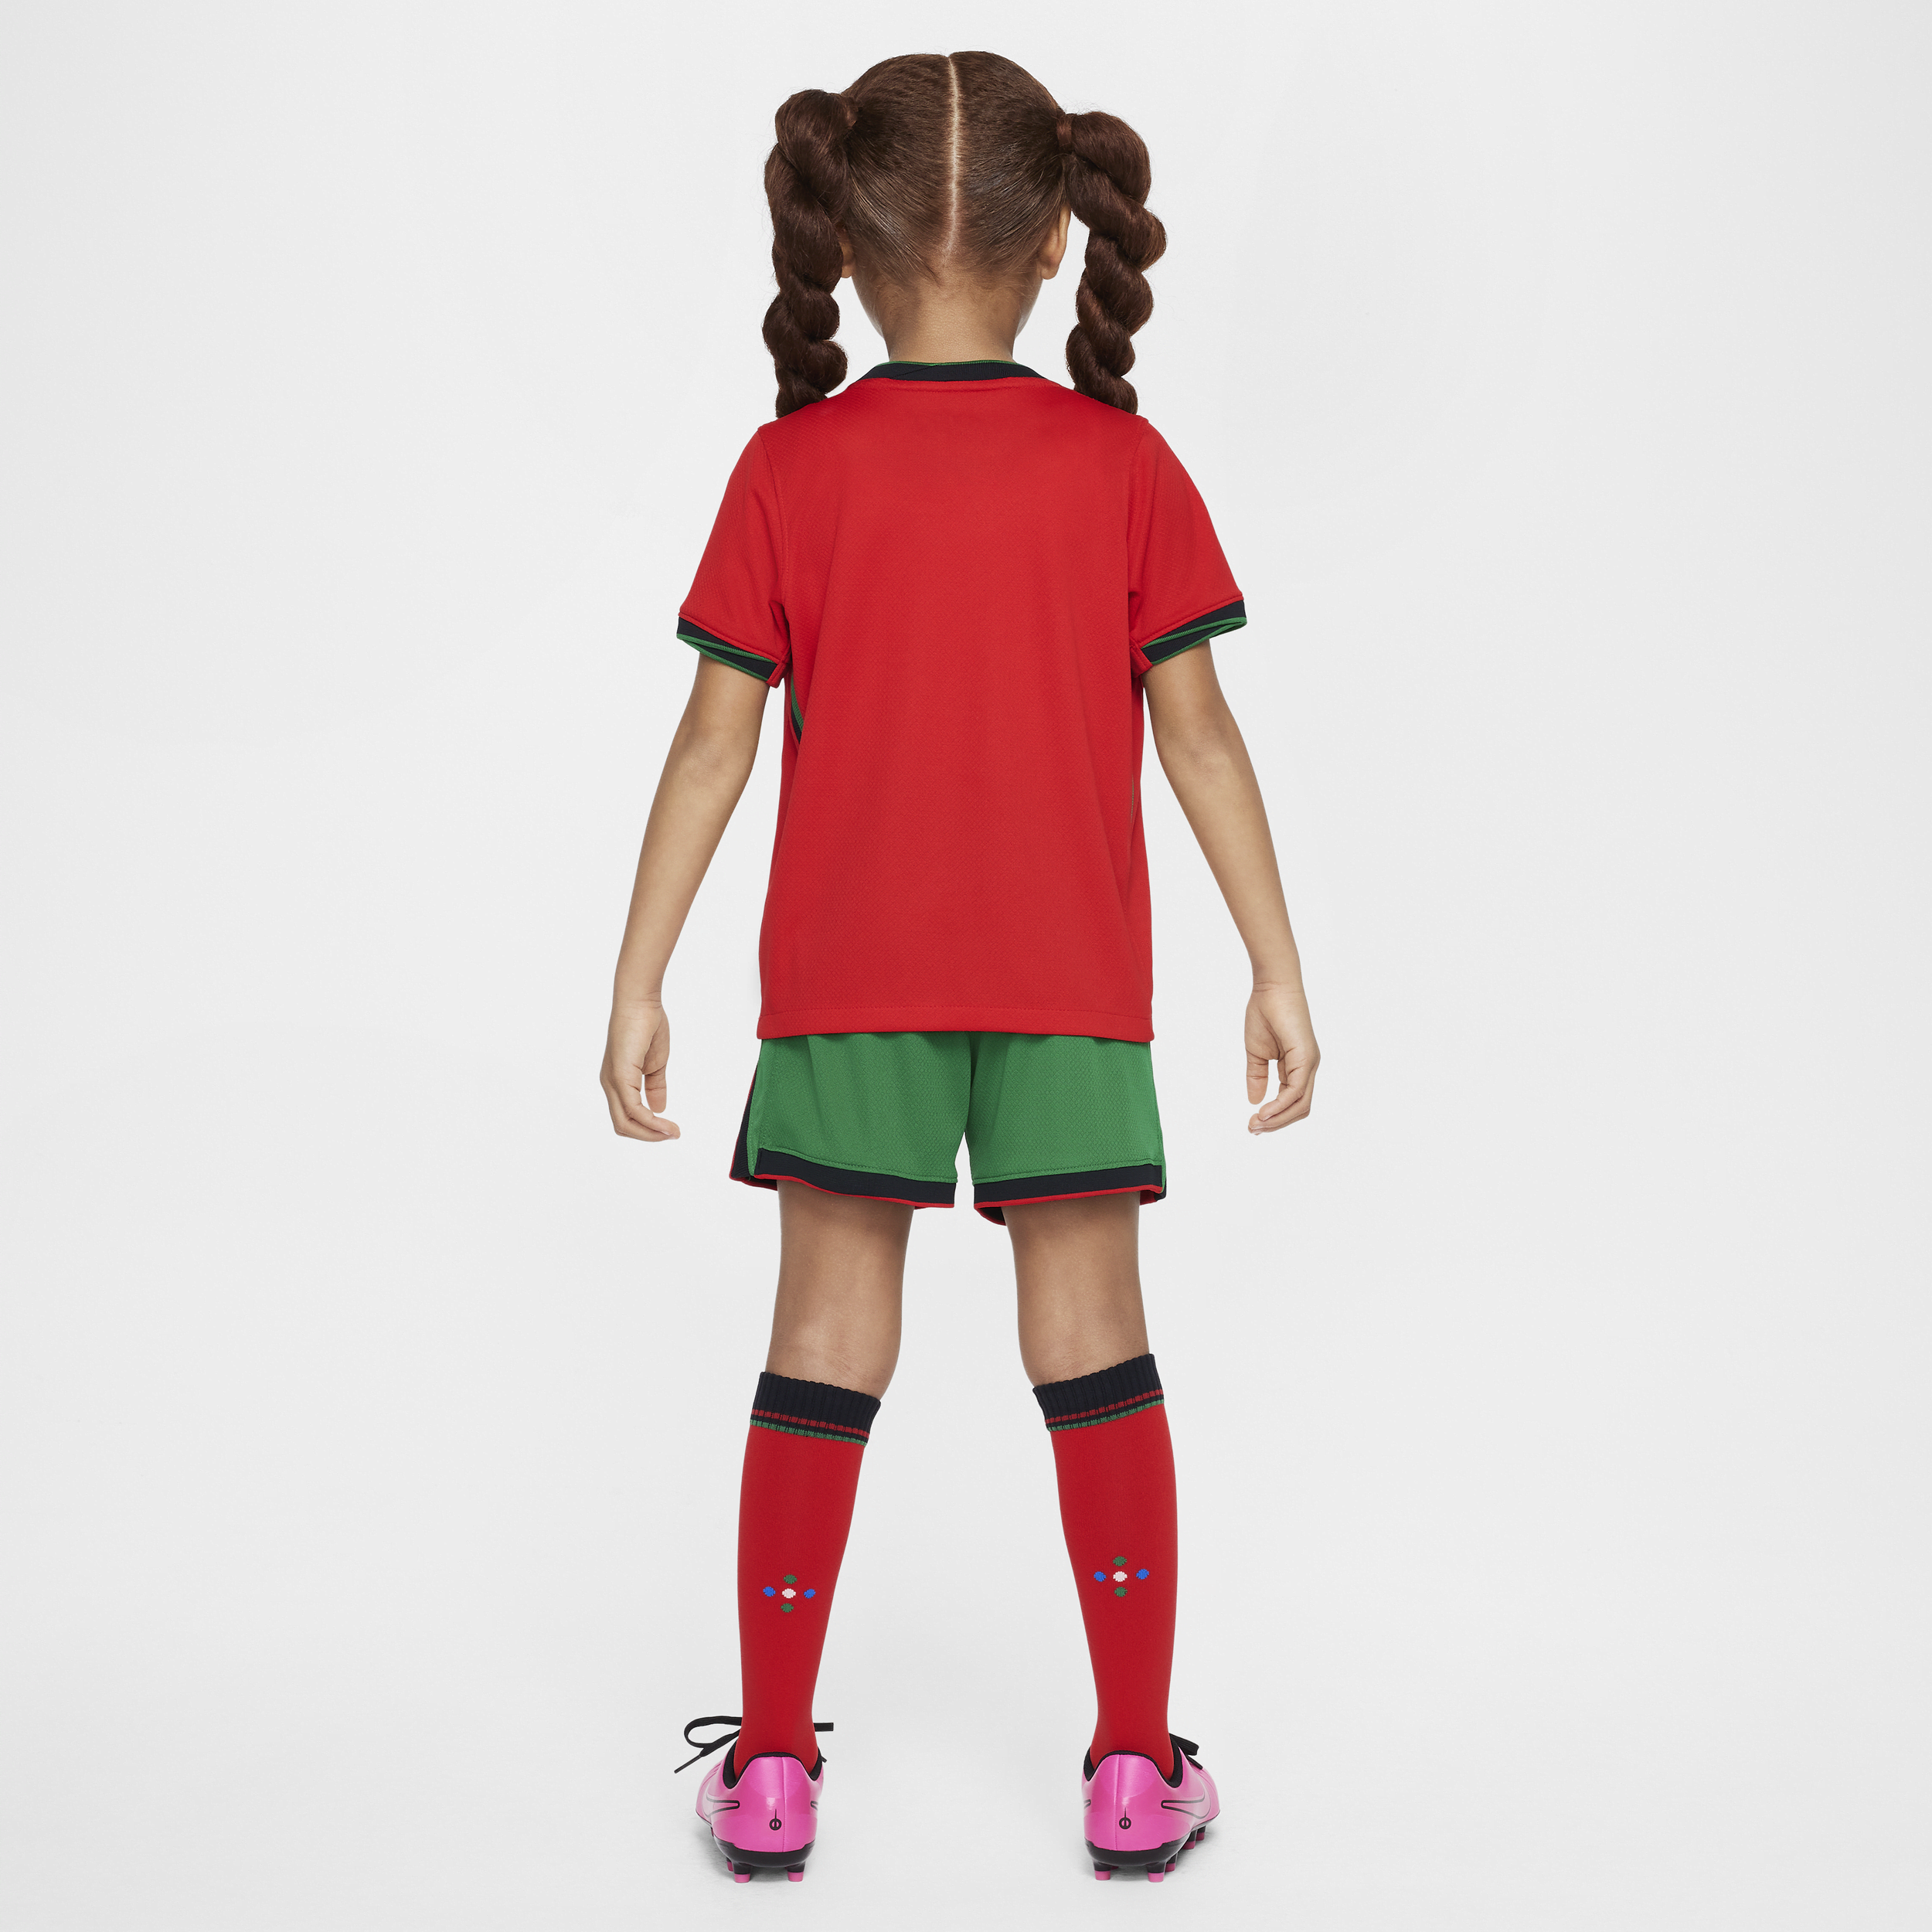 Nike Portugal 2024 Stadium Thuis driedelig replica voetbaltenue voor kleuters Rood